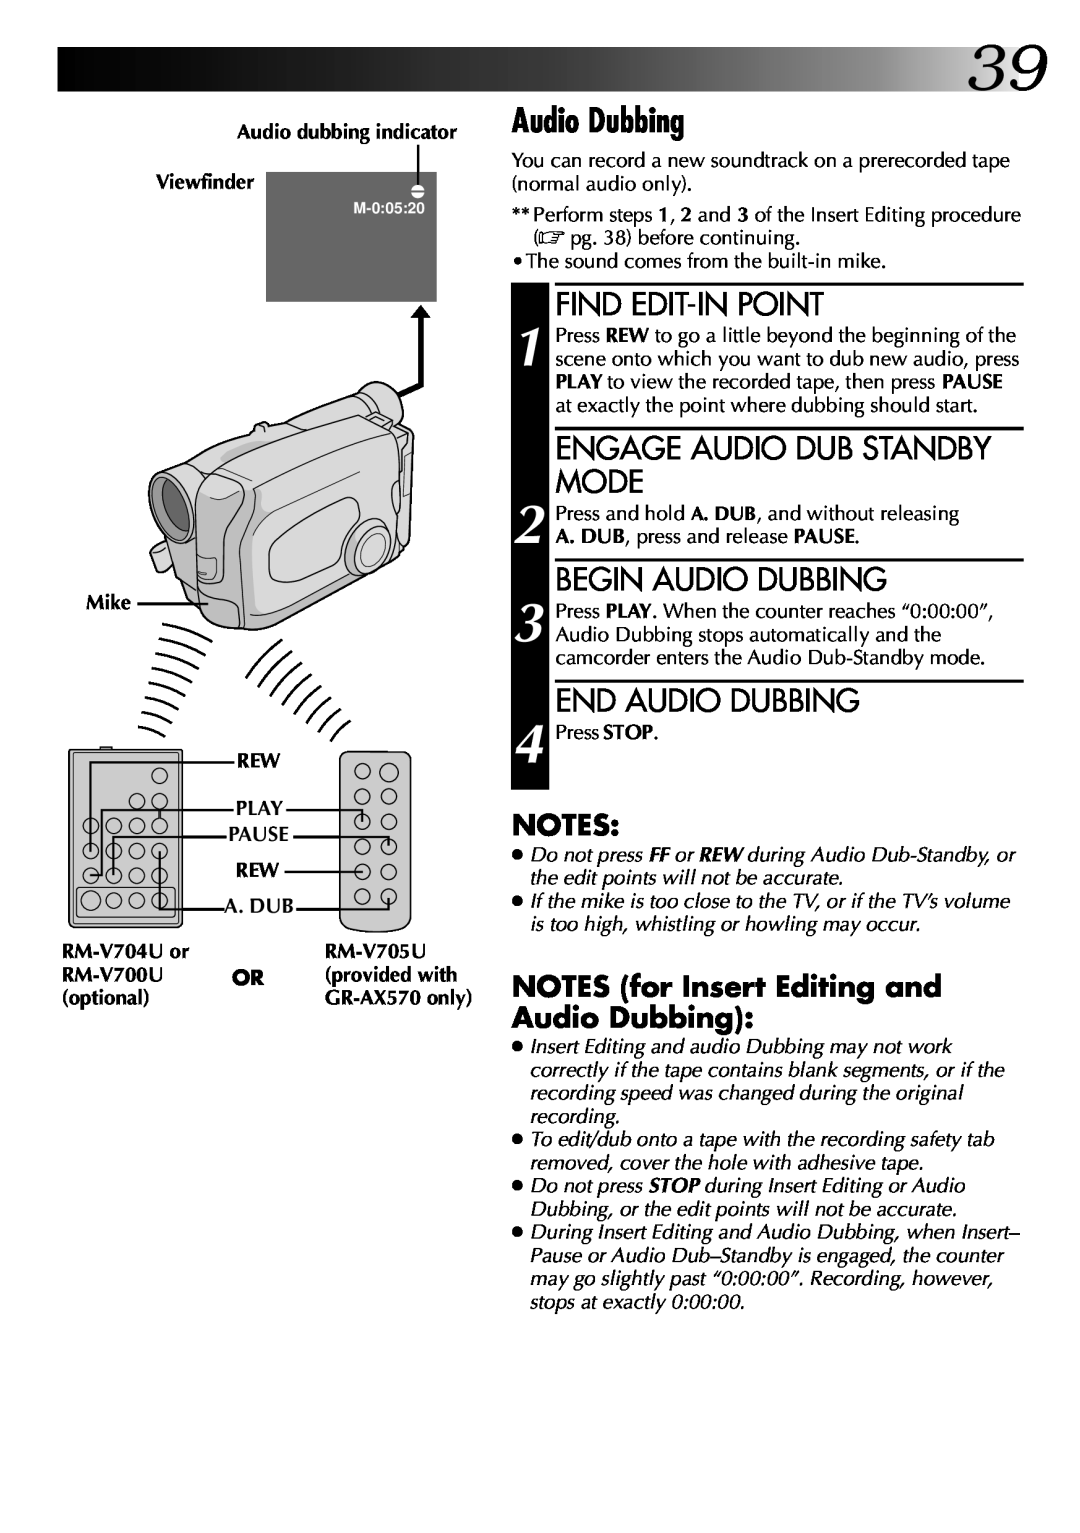 JVC GR-AX270 Audio dubbing indicator Viewfindere, Mike REW PLAY PAUSE REW A. DUB RM-V704U or RM-V700U OR optional, M-00520 